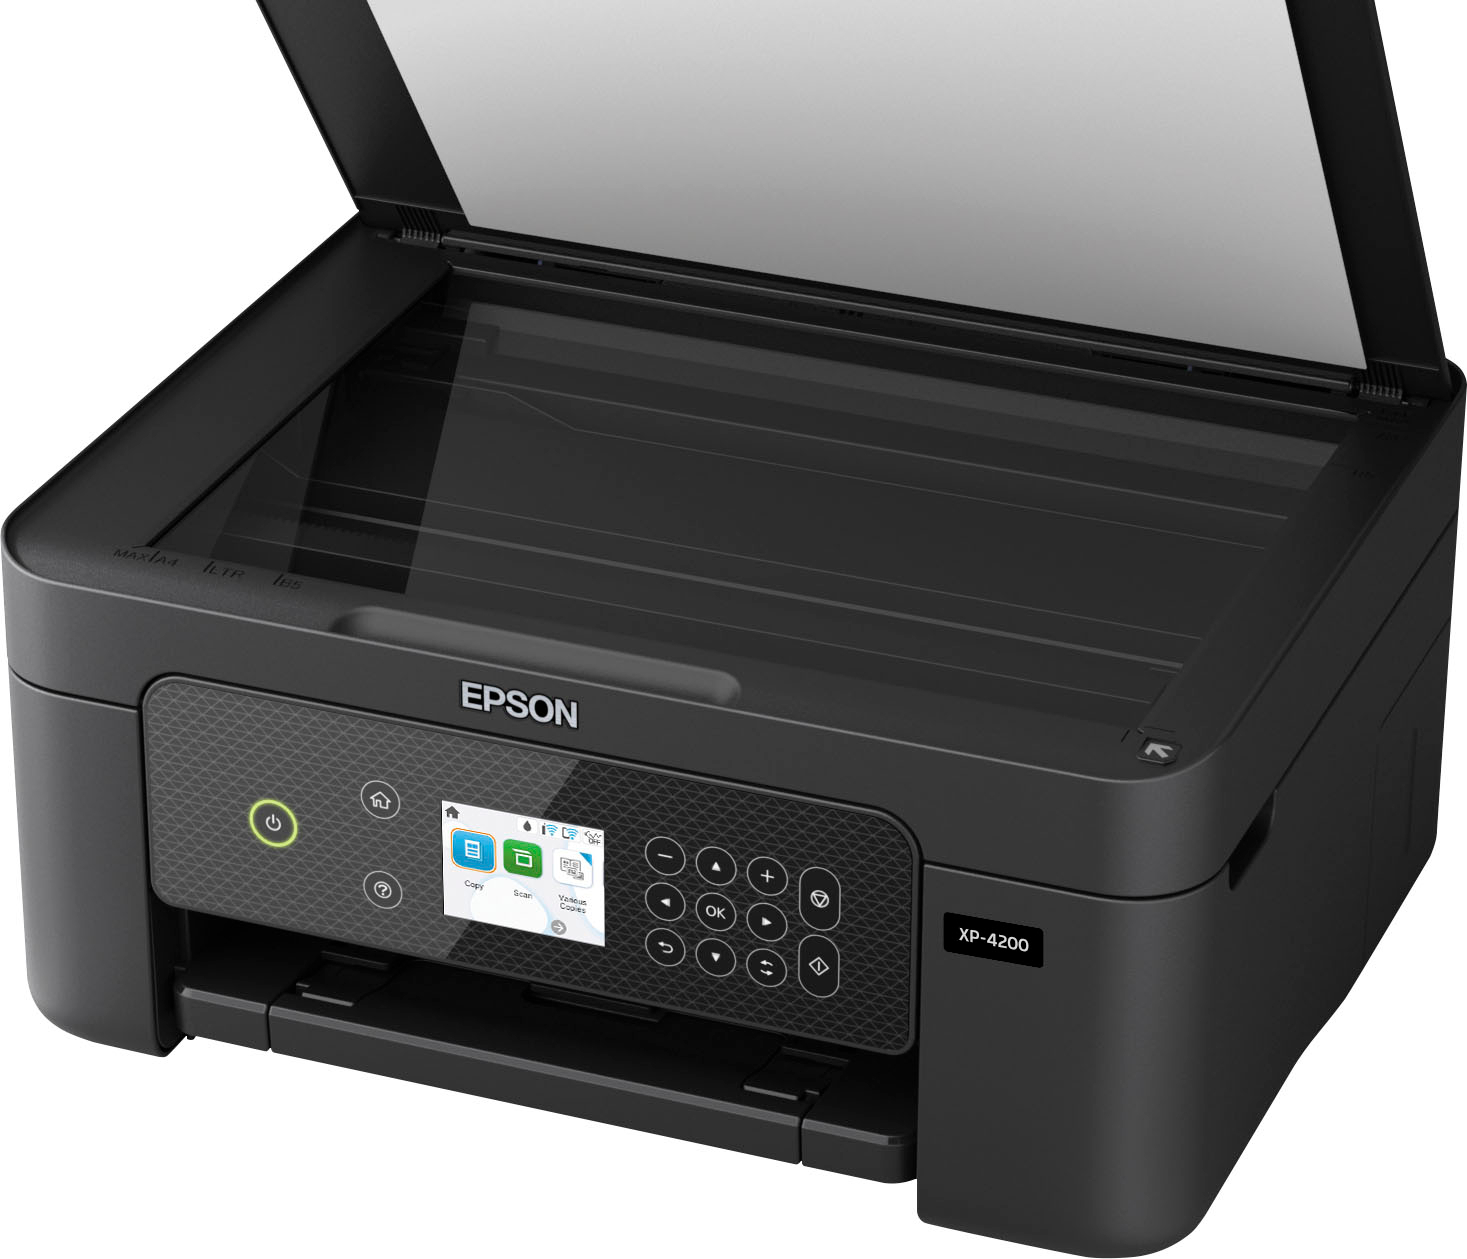 Epson Expression XP-4200 Inkjet Printer - Best Buy